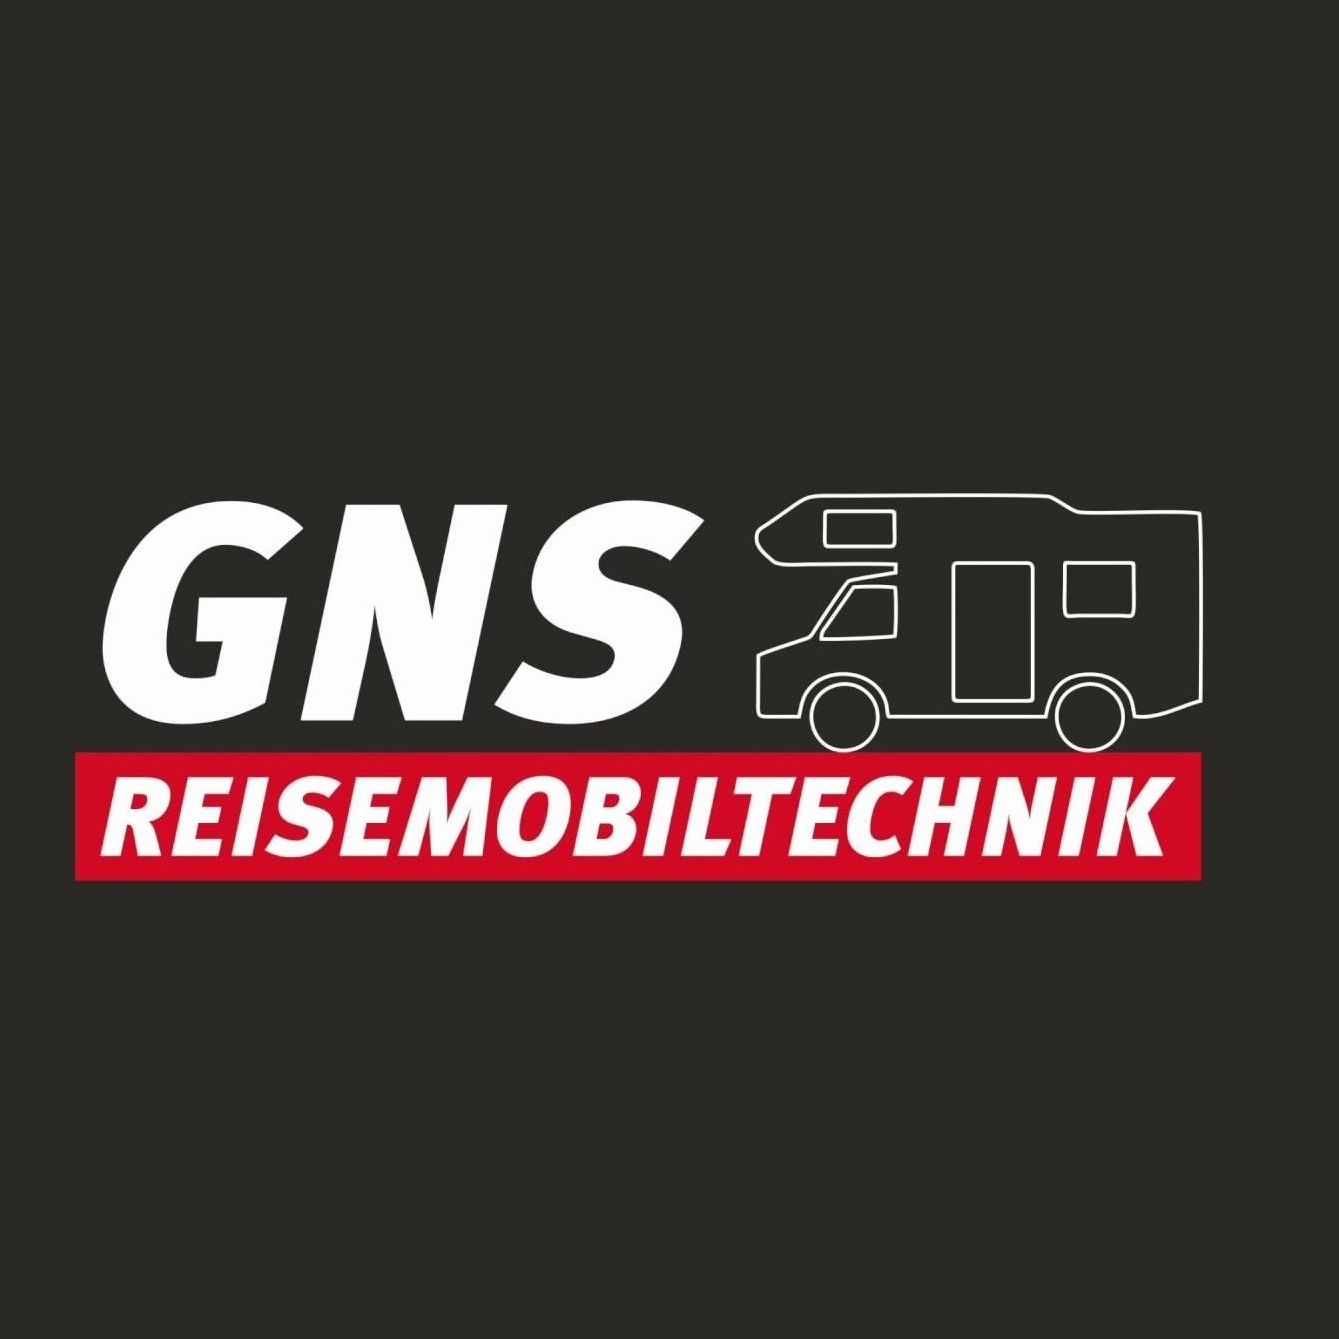 Julians GNS Reisemobiltechnik Logo